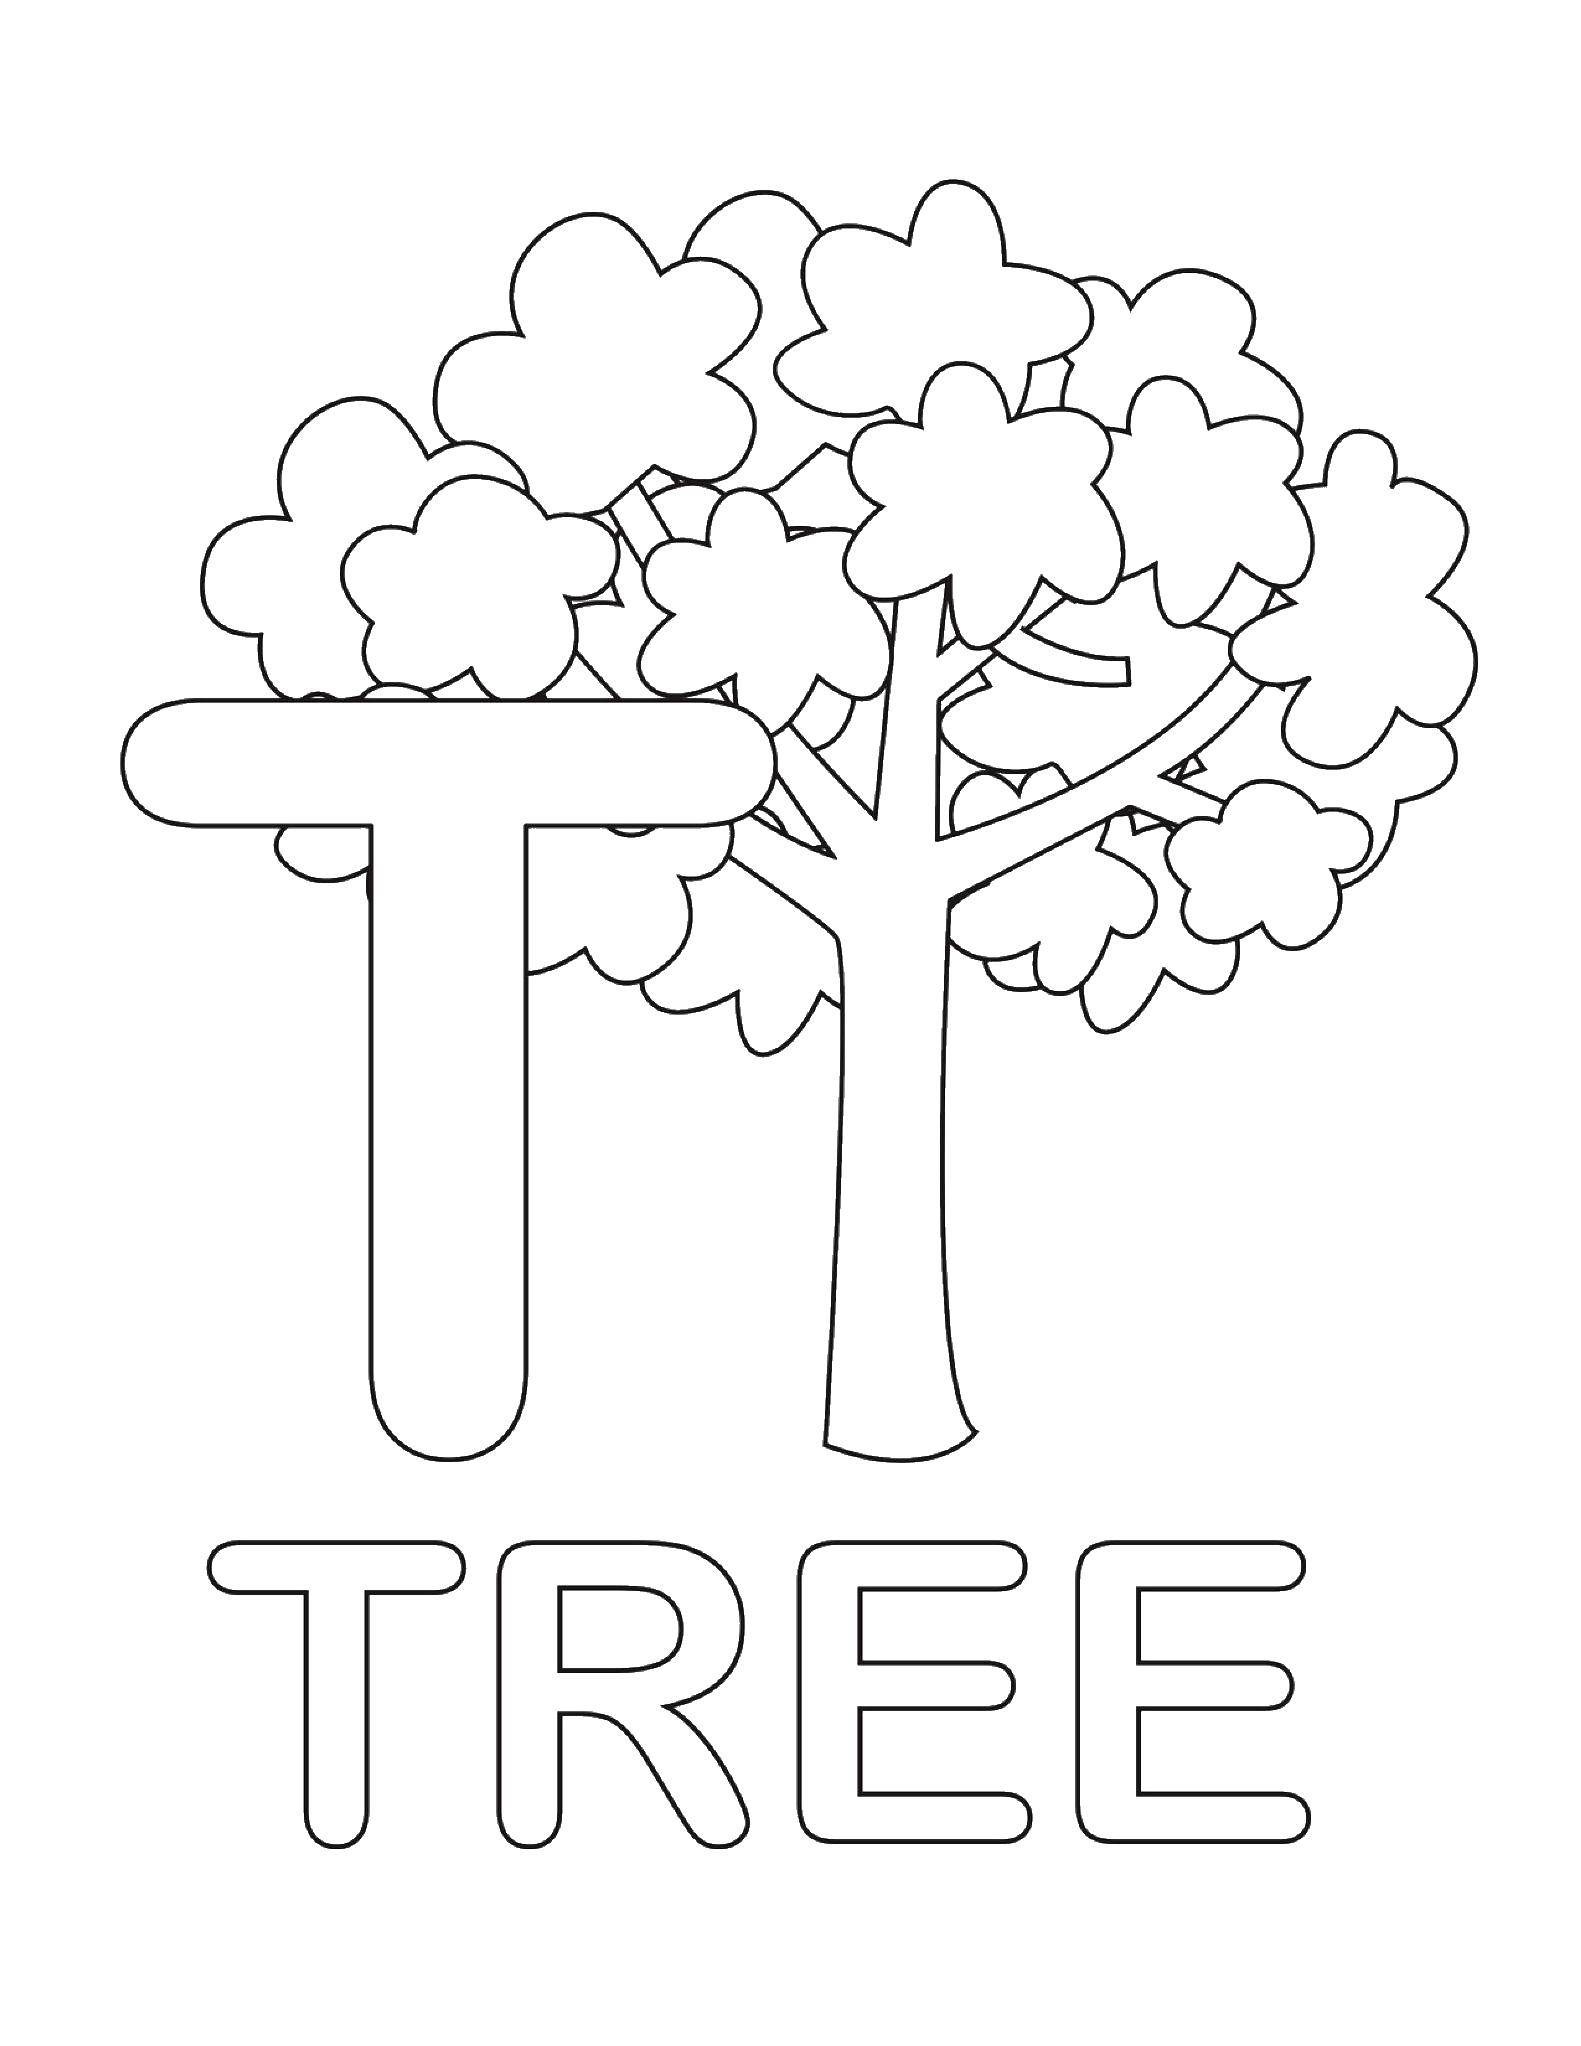 Название: Раскраска Дерево. Категория: английские слова. Теги: английские слова, дерево.